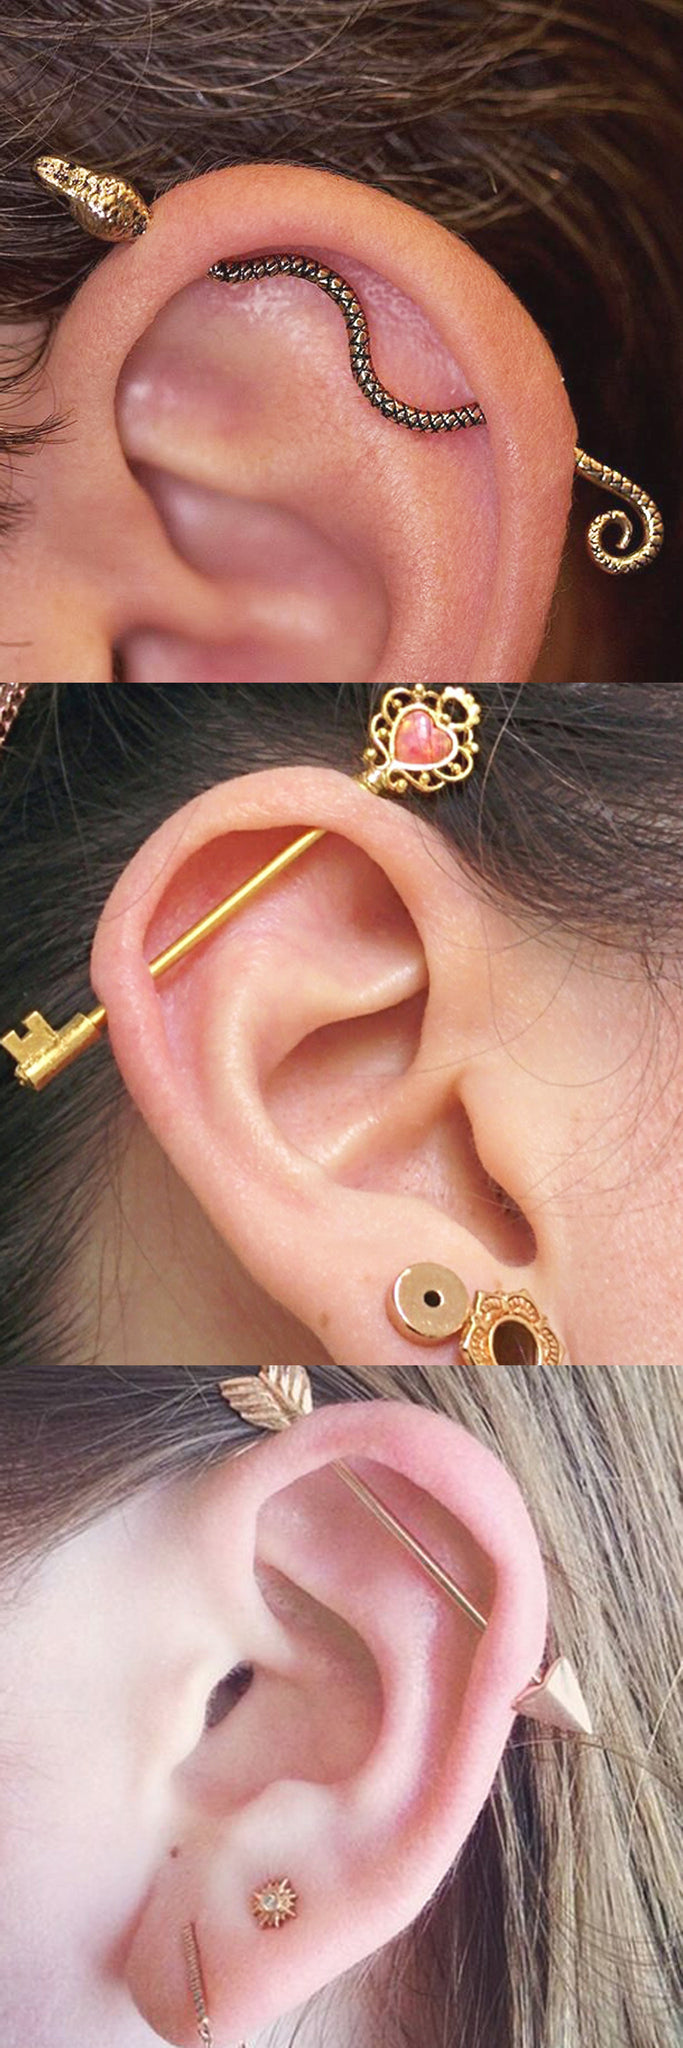 Delicate Ear Piercing Ideas at MyBodiart.com - Industrial 14G Barbell 14G Gold Upper Earring Bar